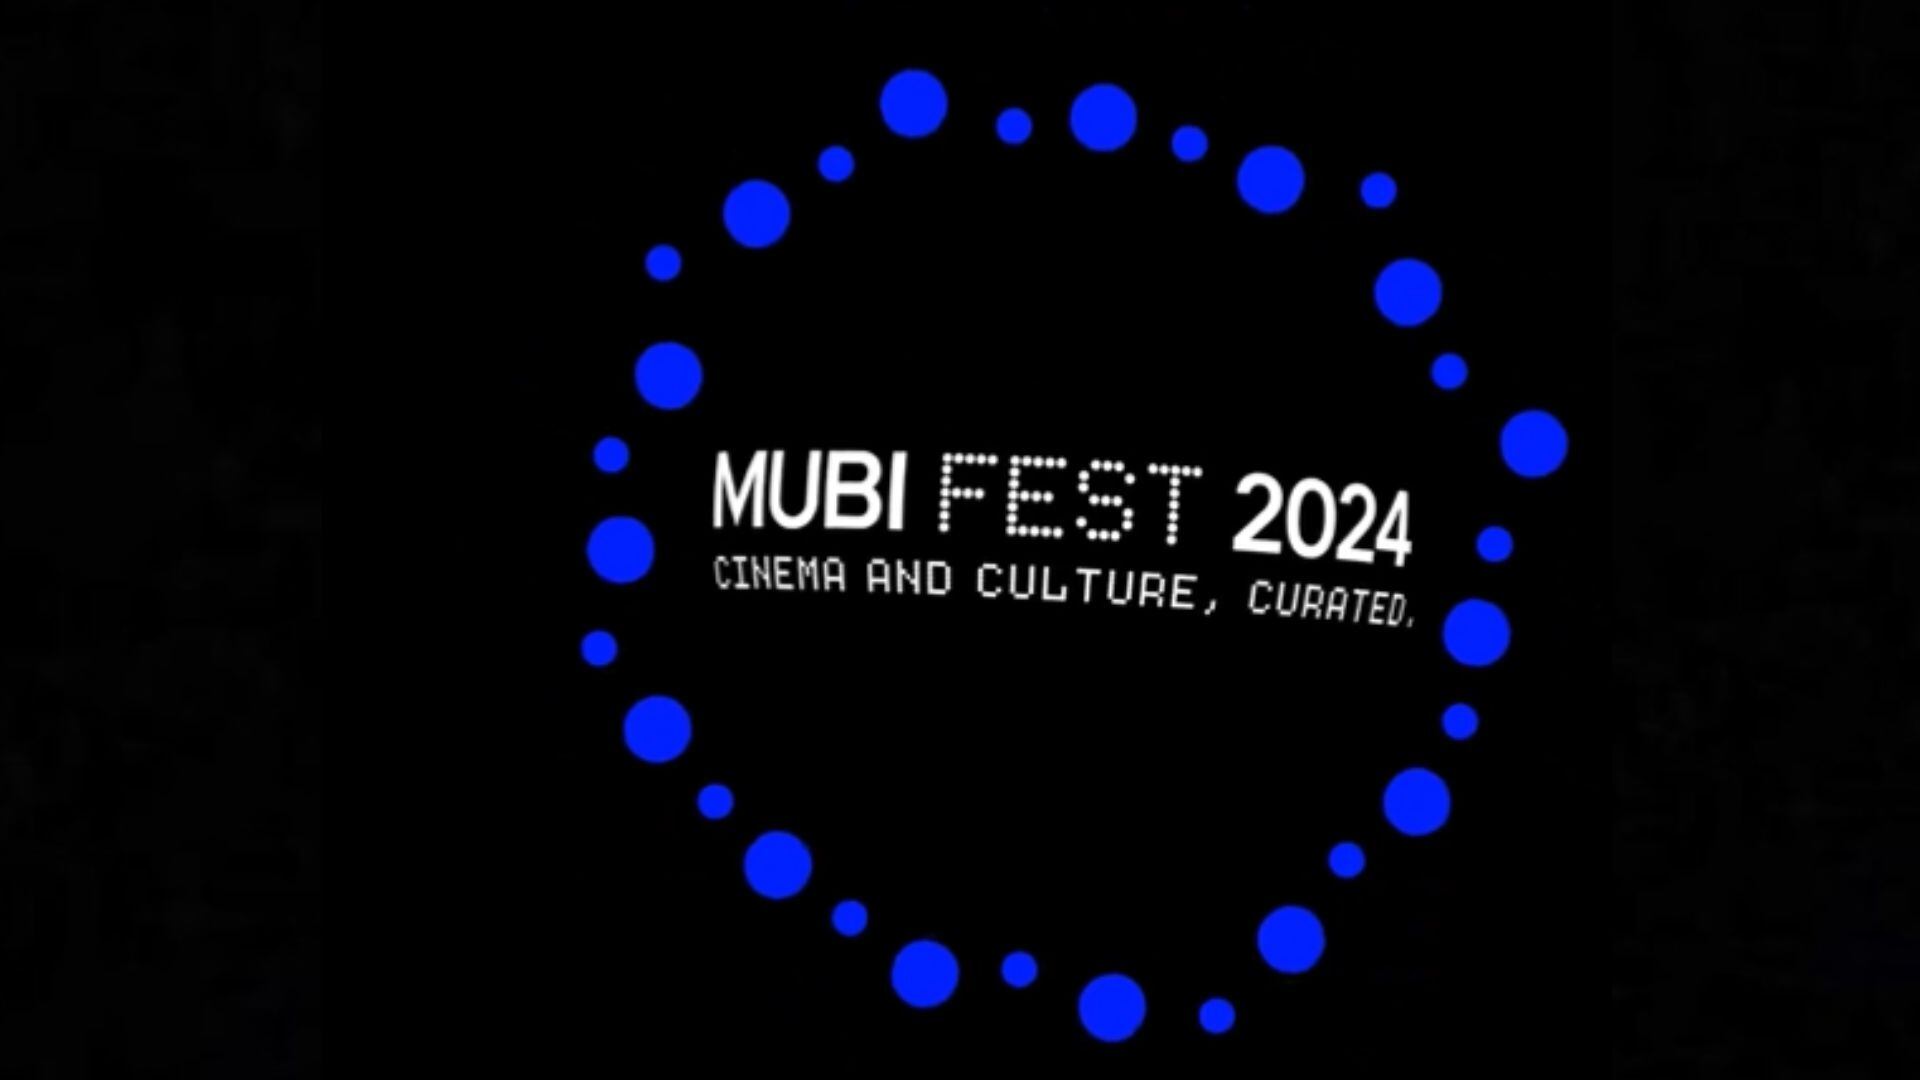 MUBI MUBI FEST CDMX CINETECA NACIONAL